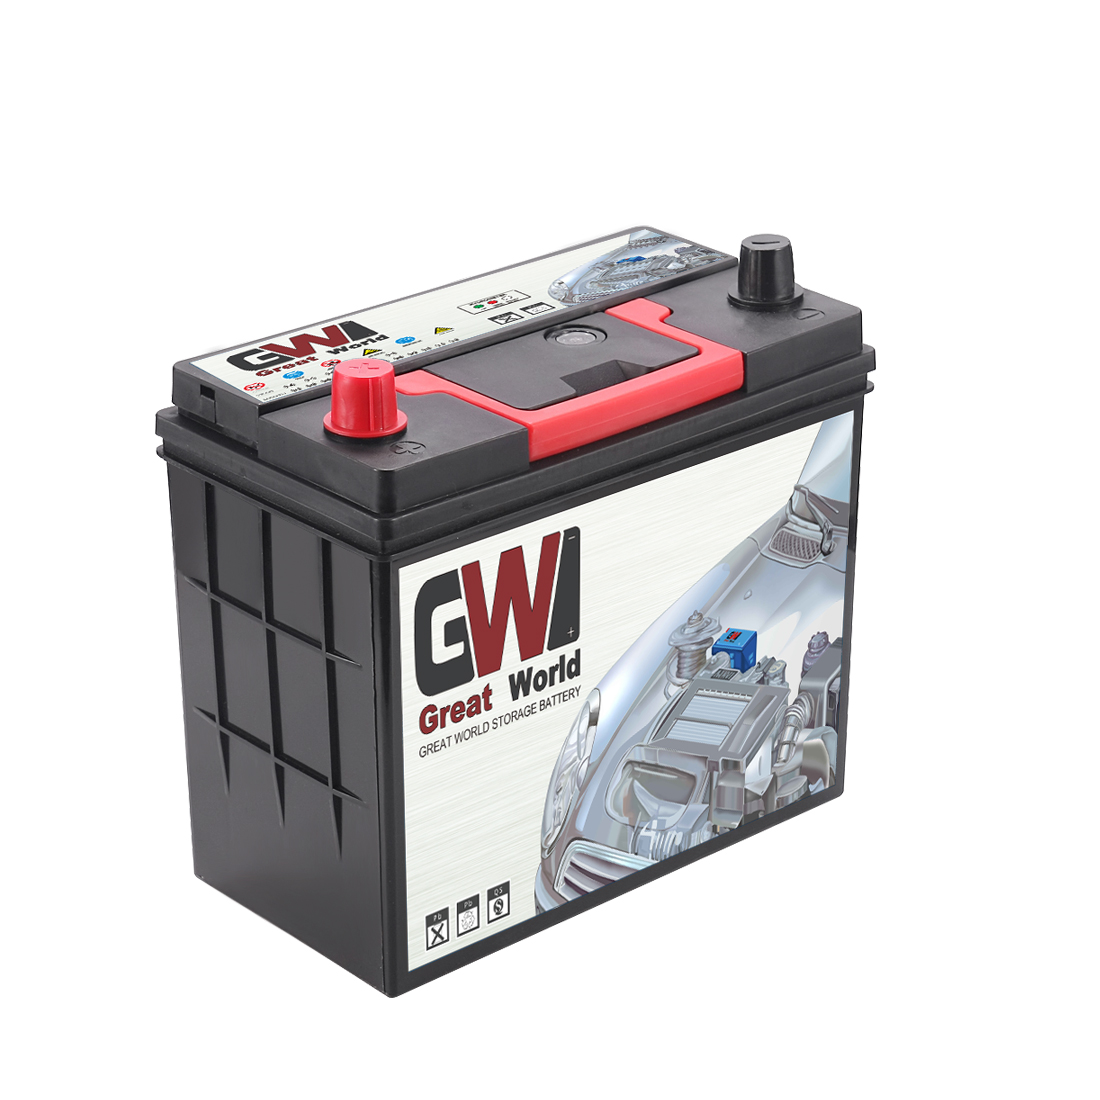 GW Brand JIS N45 Car Battery 12V 45Ah Maintenance Free Lead-acid Starter Auto Battery